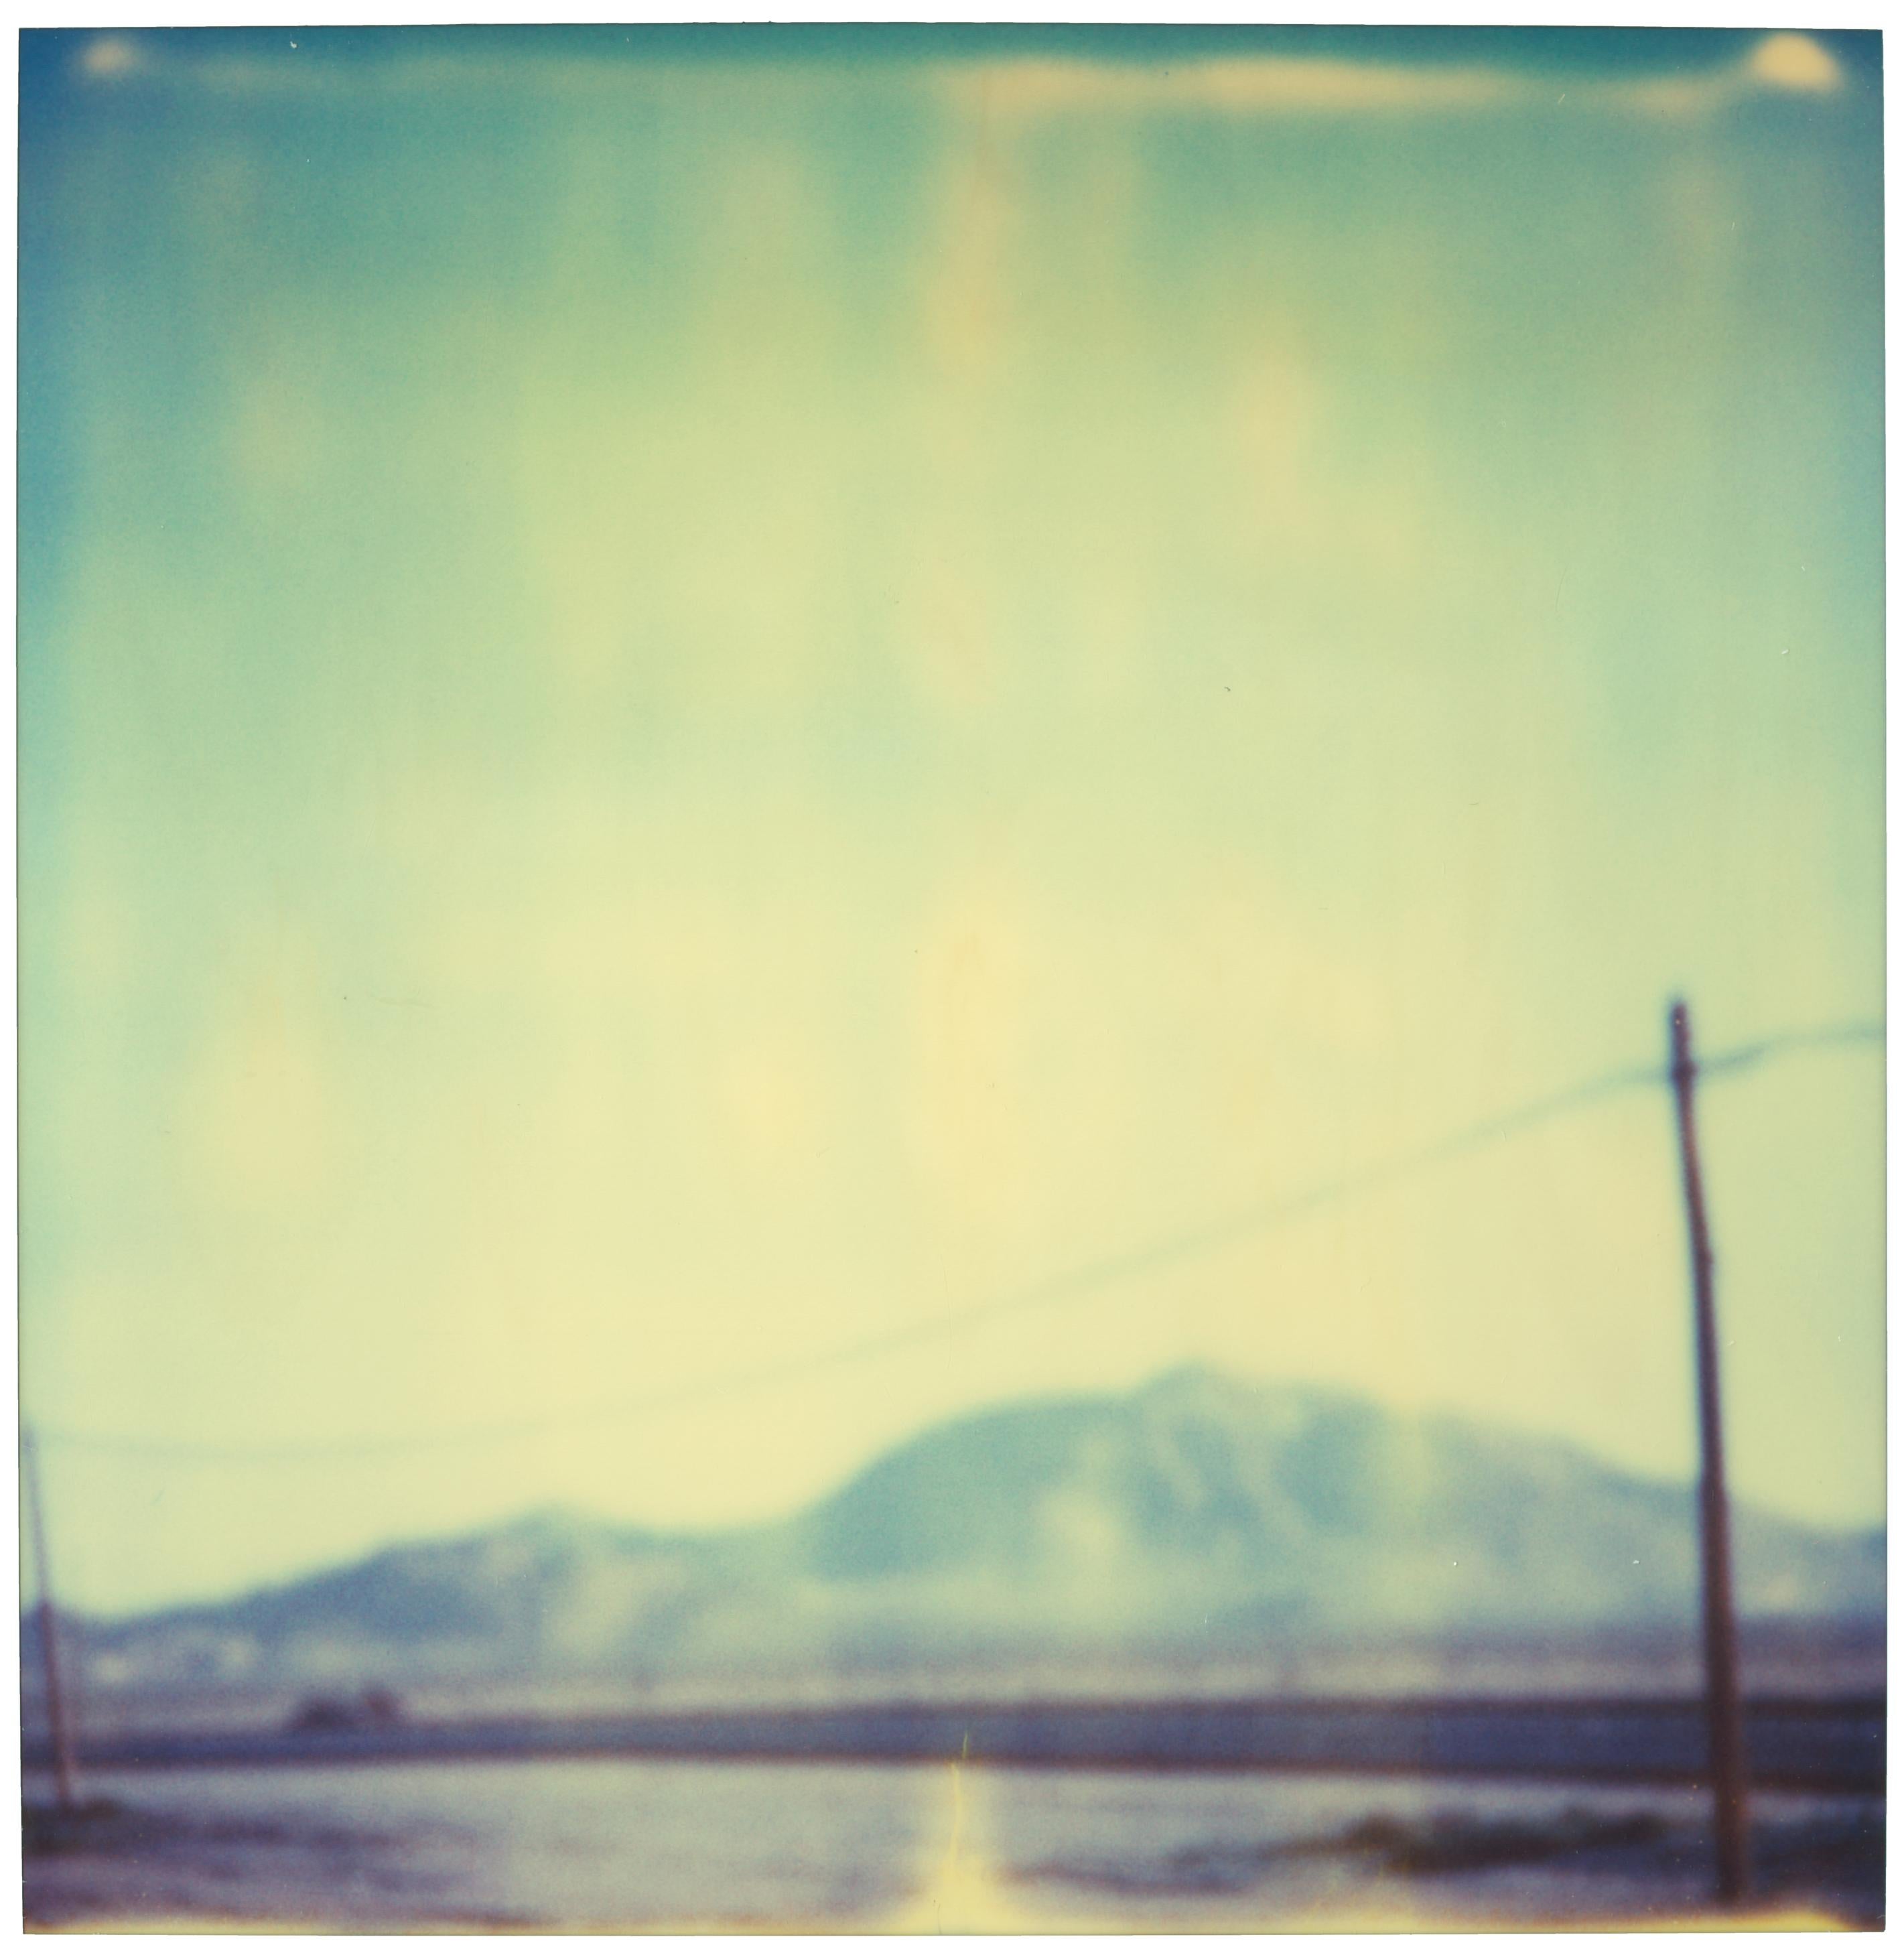 Stefanie Schneider Landscape Photograph - Traintracks - analog C-Print, based on a Polaroid